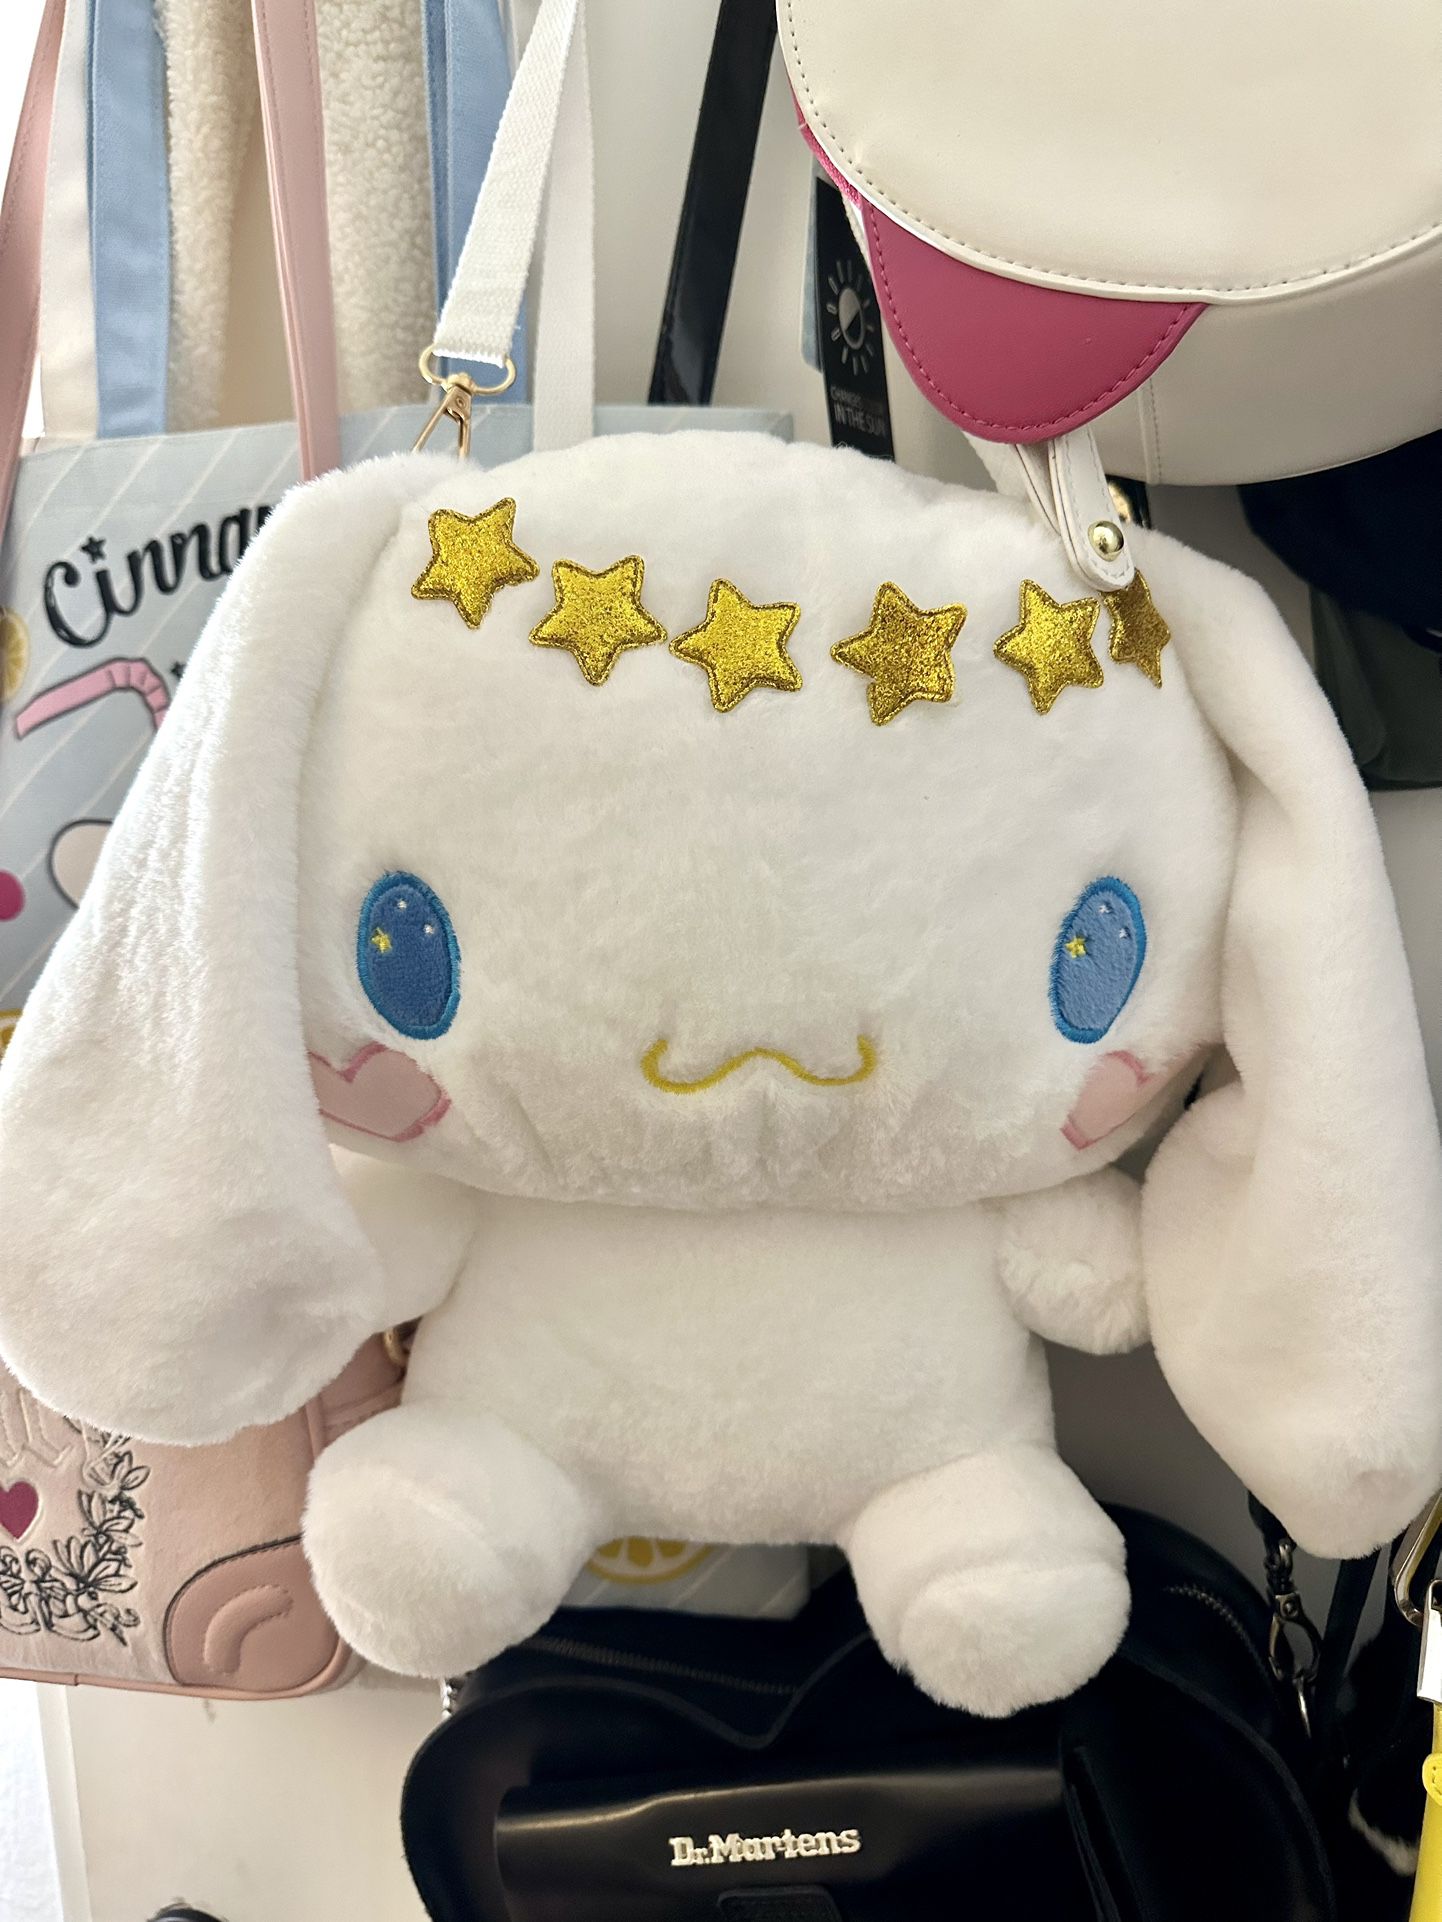 Sanrio Plush Backpack